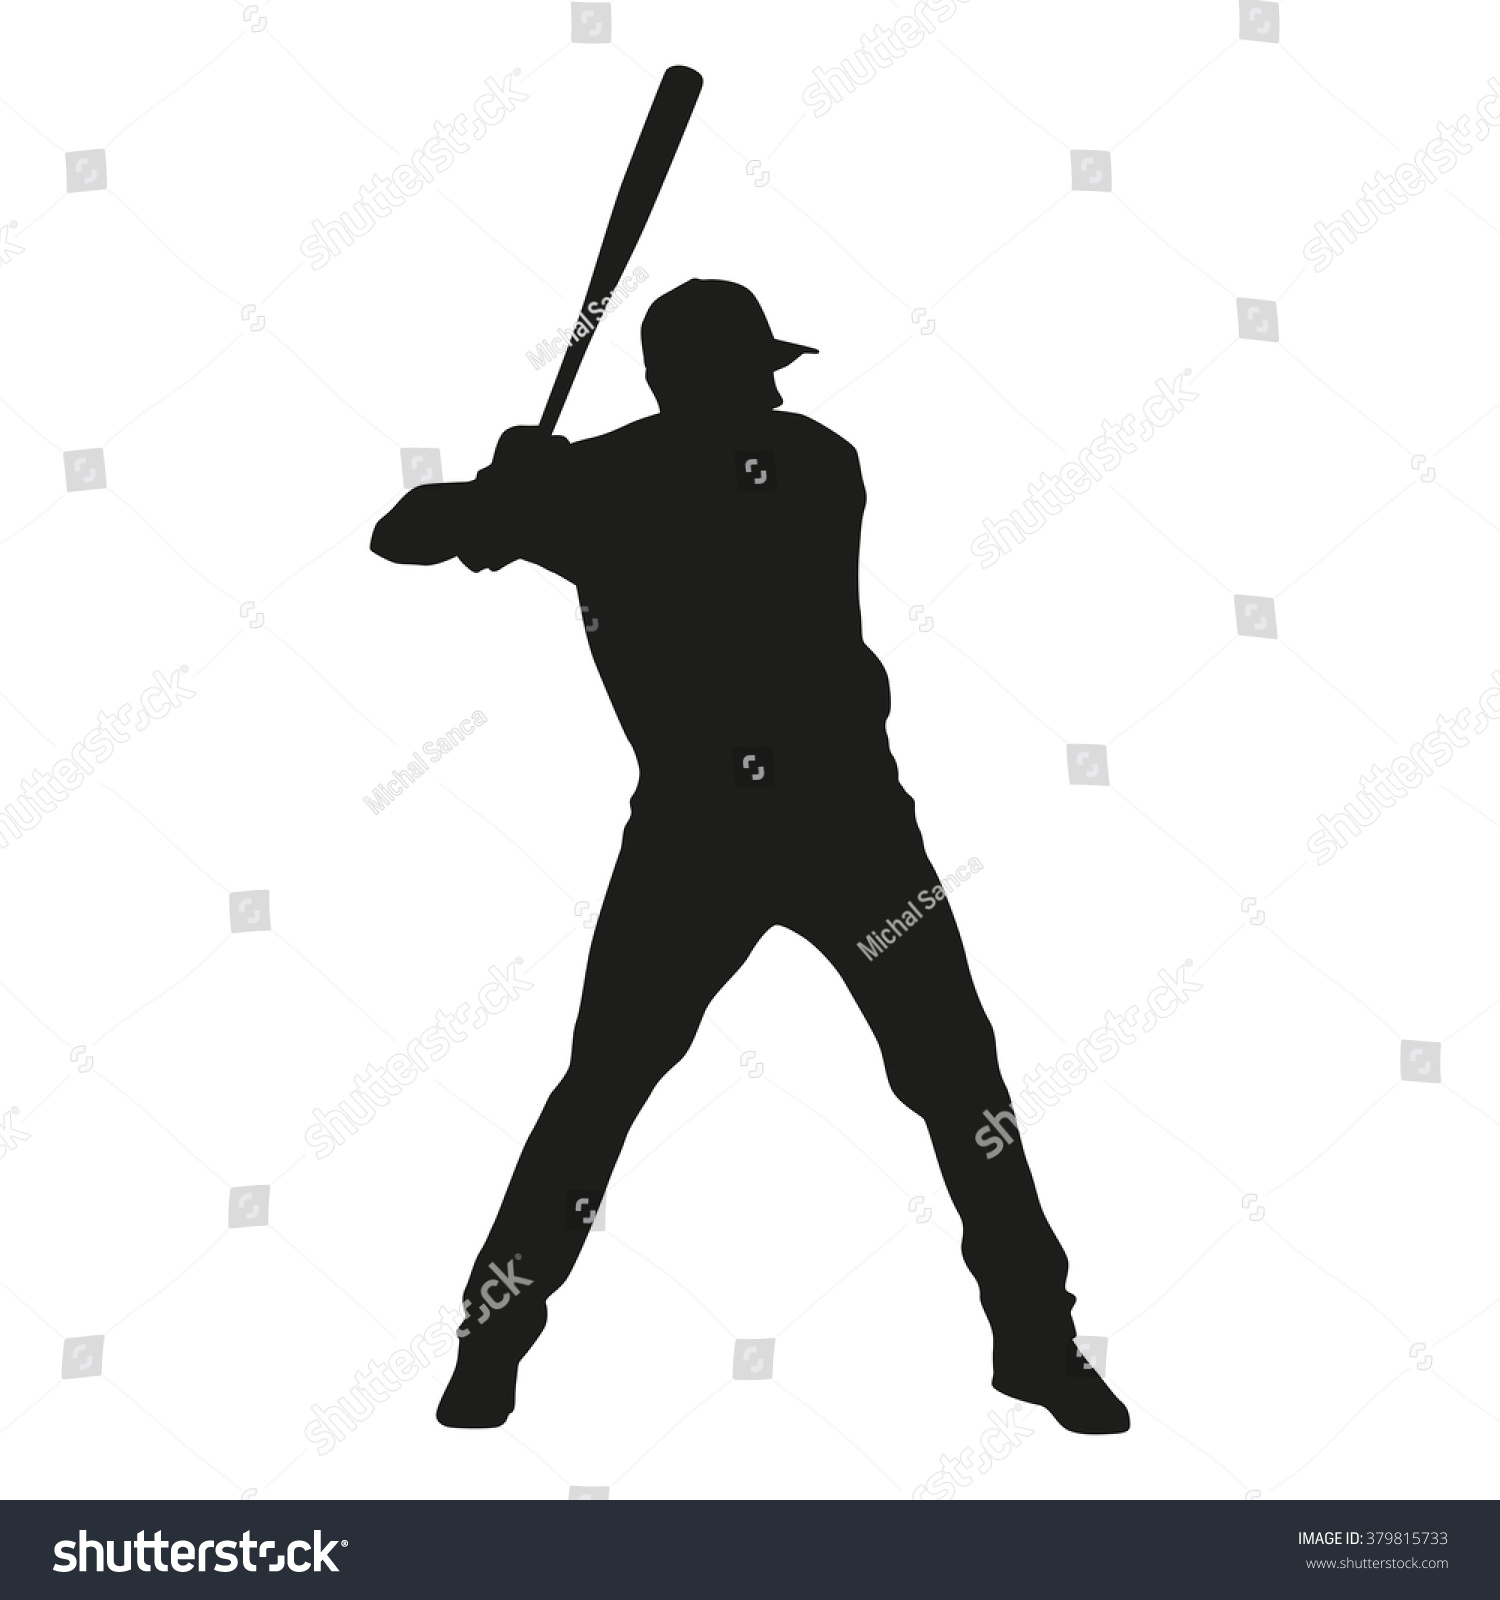 Baseball Player Silhouette, Man Batter Vector - 379815733 : Shutterstock